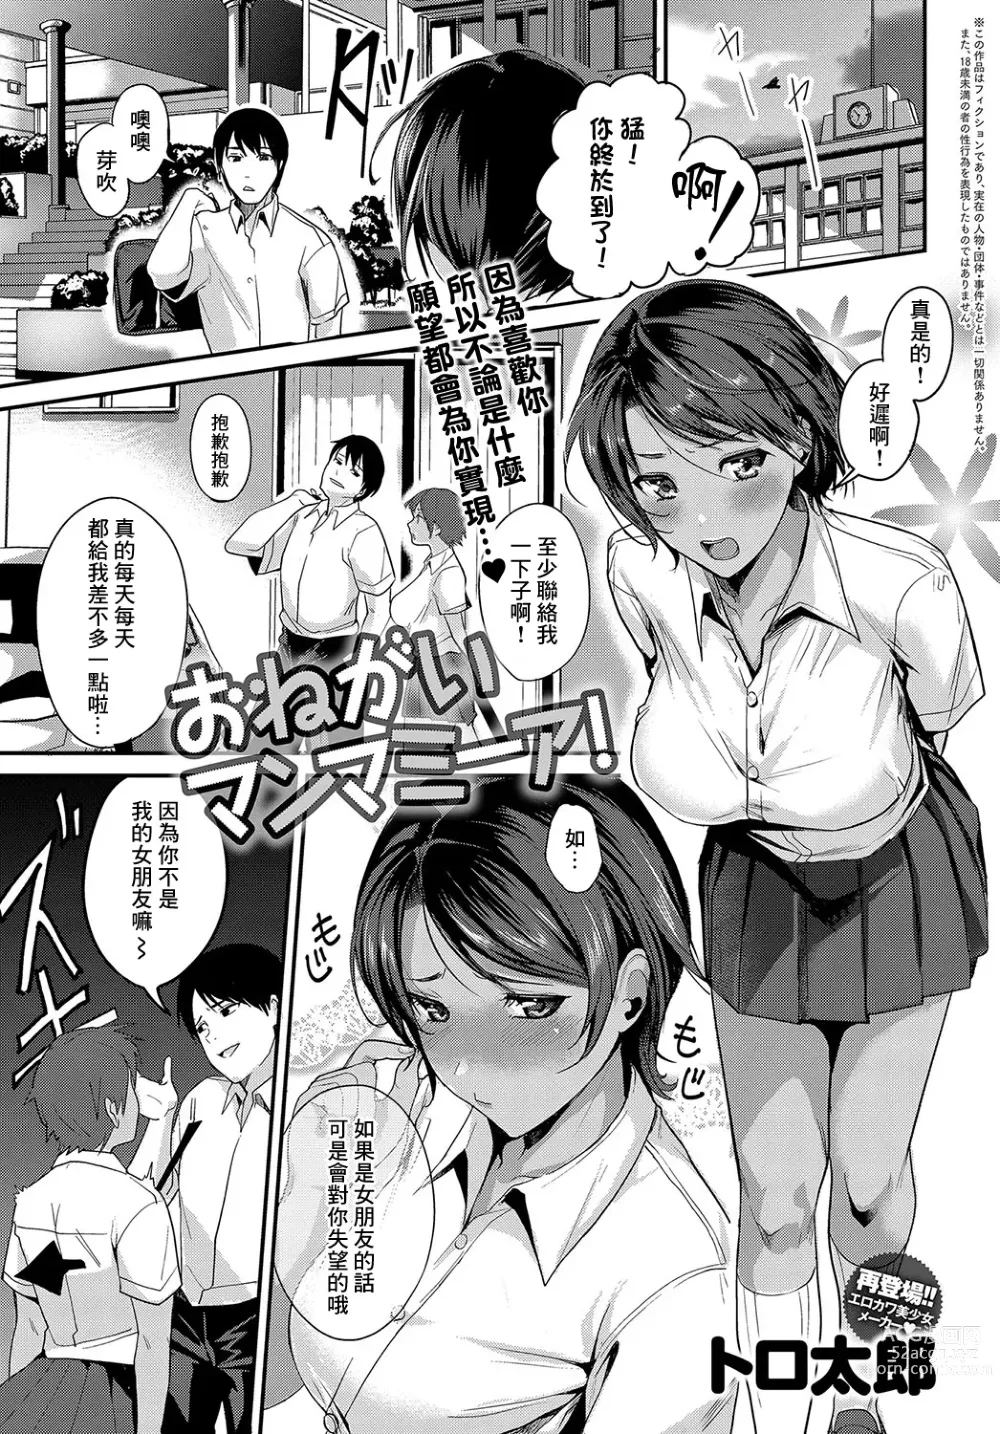 Page 1 of manga Onegai Mamma Mia!